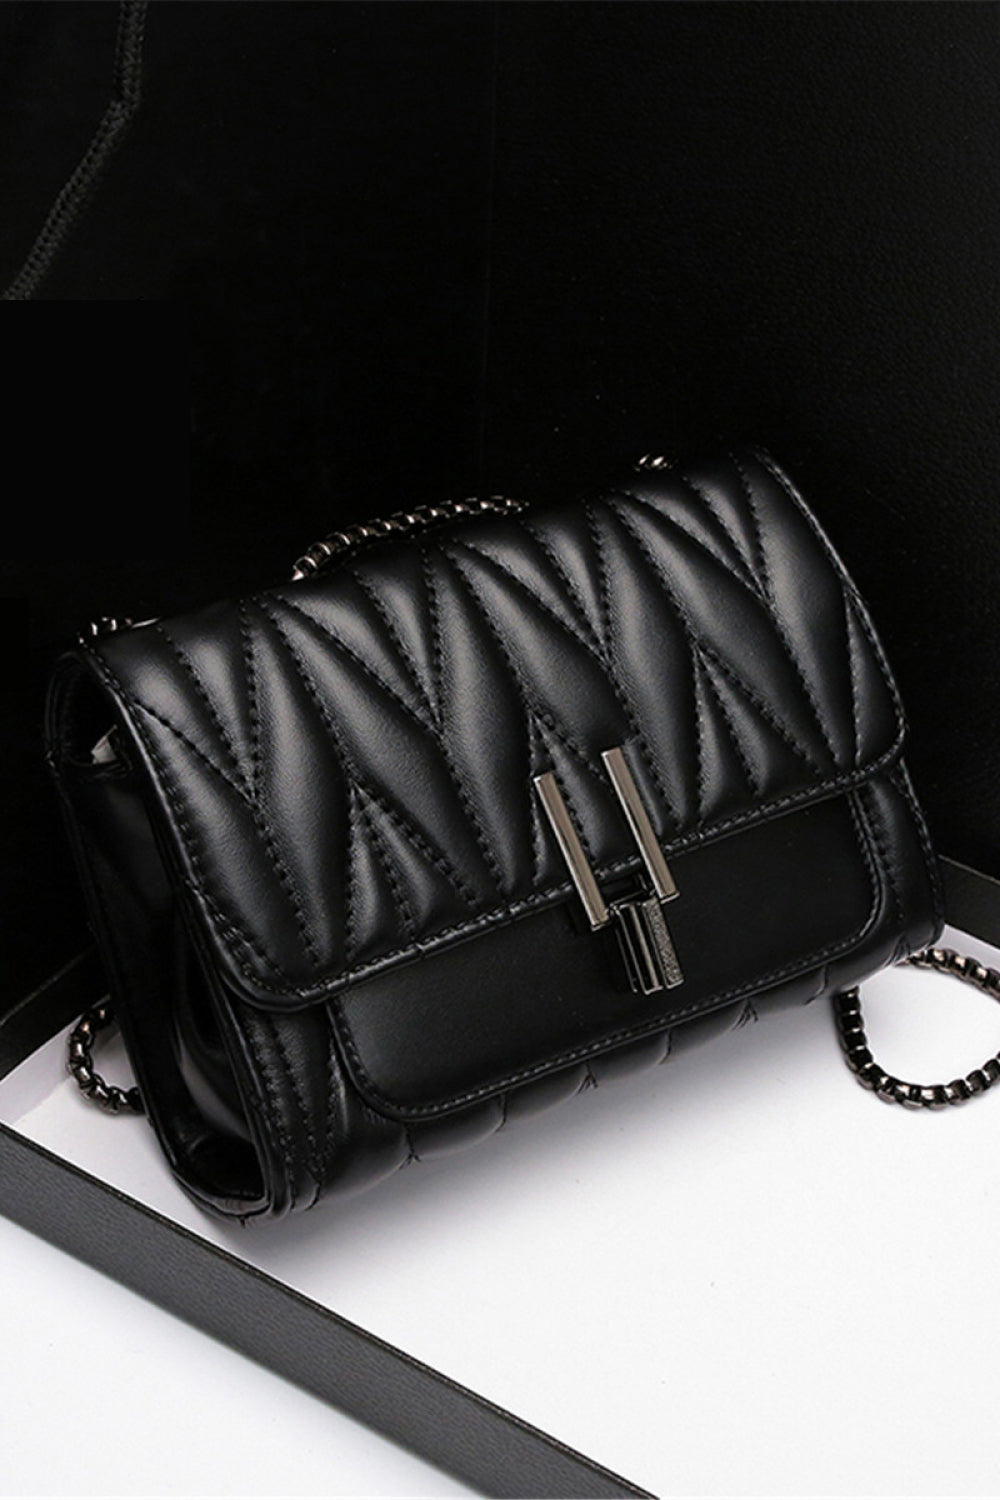 PU Leather Crossbody Bag - Black / One Size Wynter 4 All Seasons